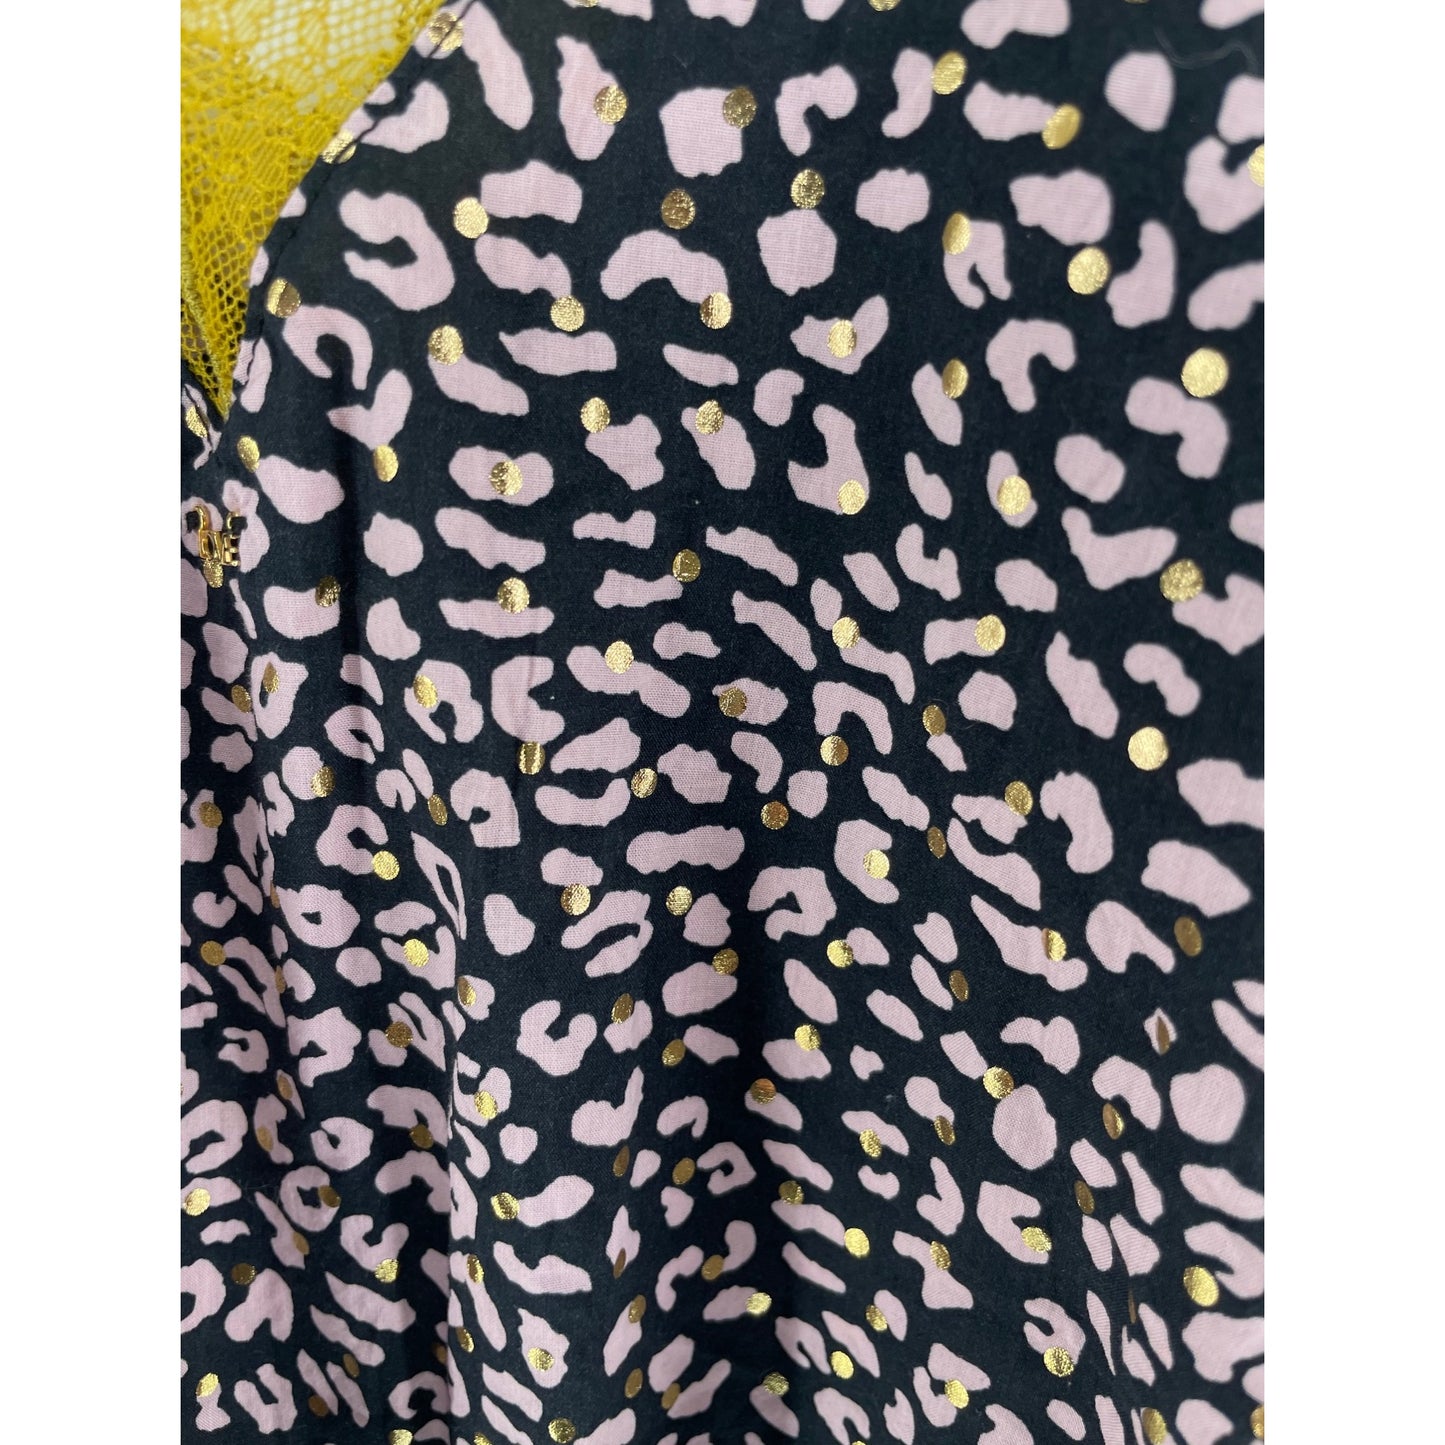 Victoria's Secret Women's Size XL Black/Pink/Mustard Yellow/Gold Leopard Print Lace Cami